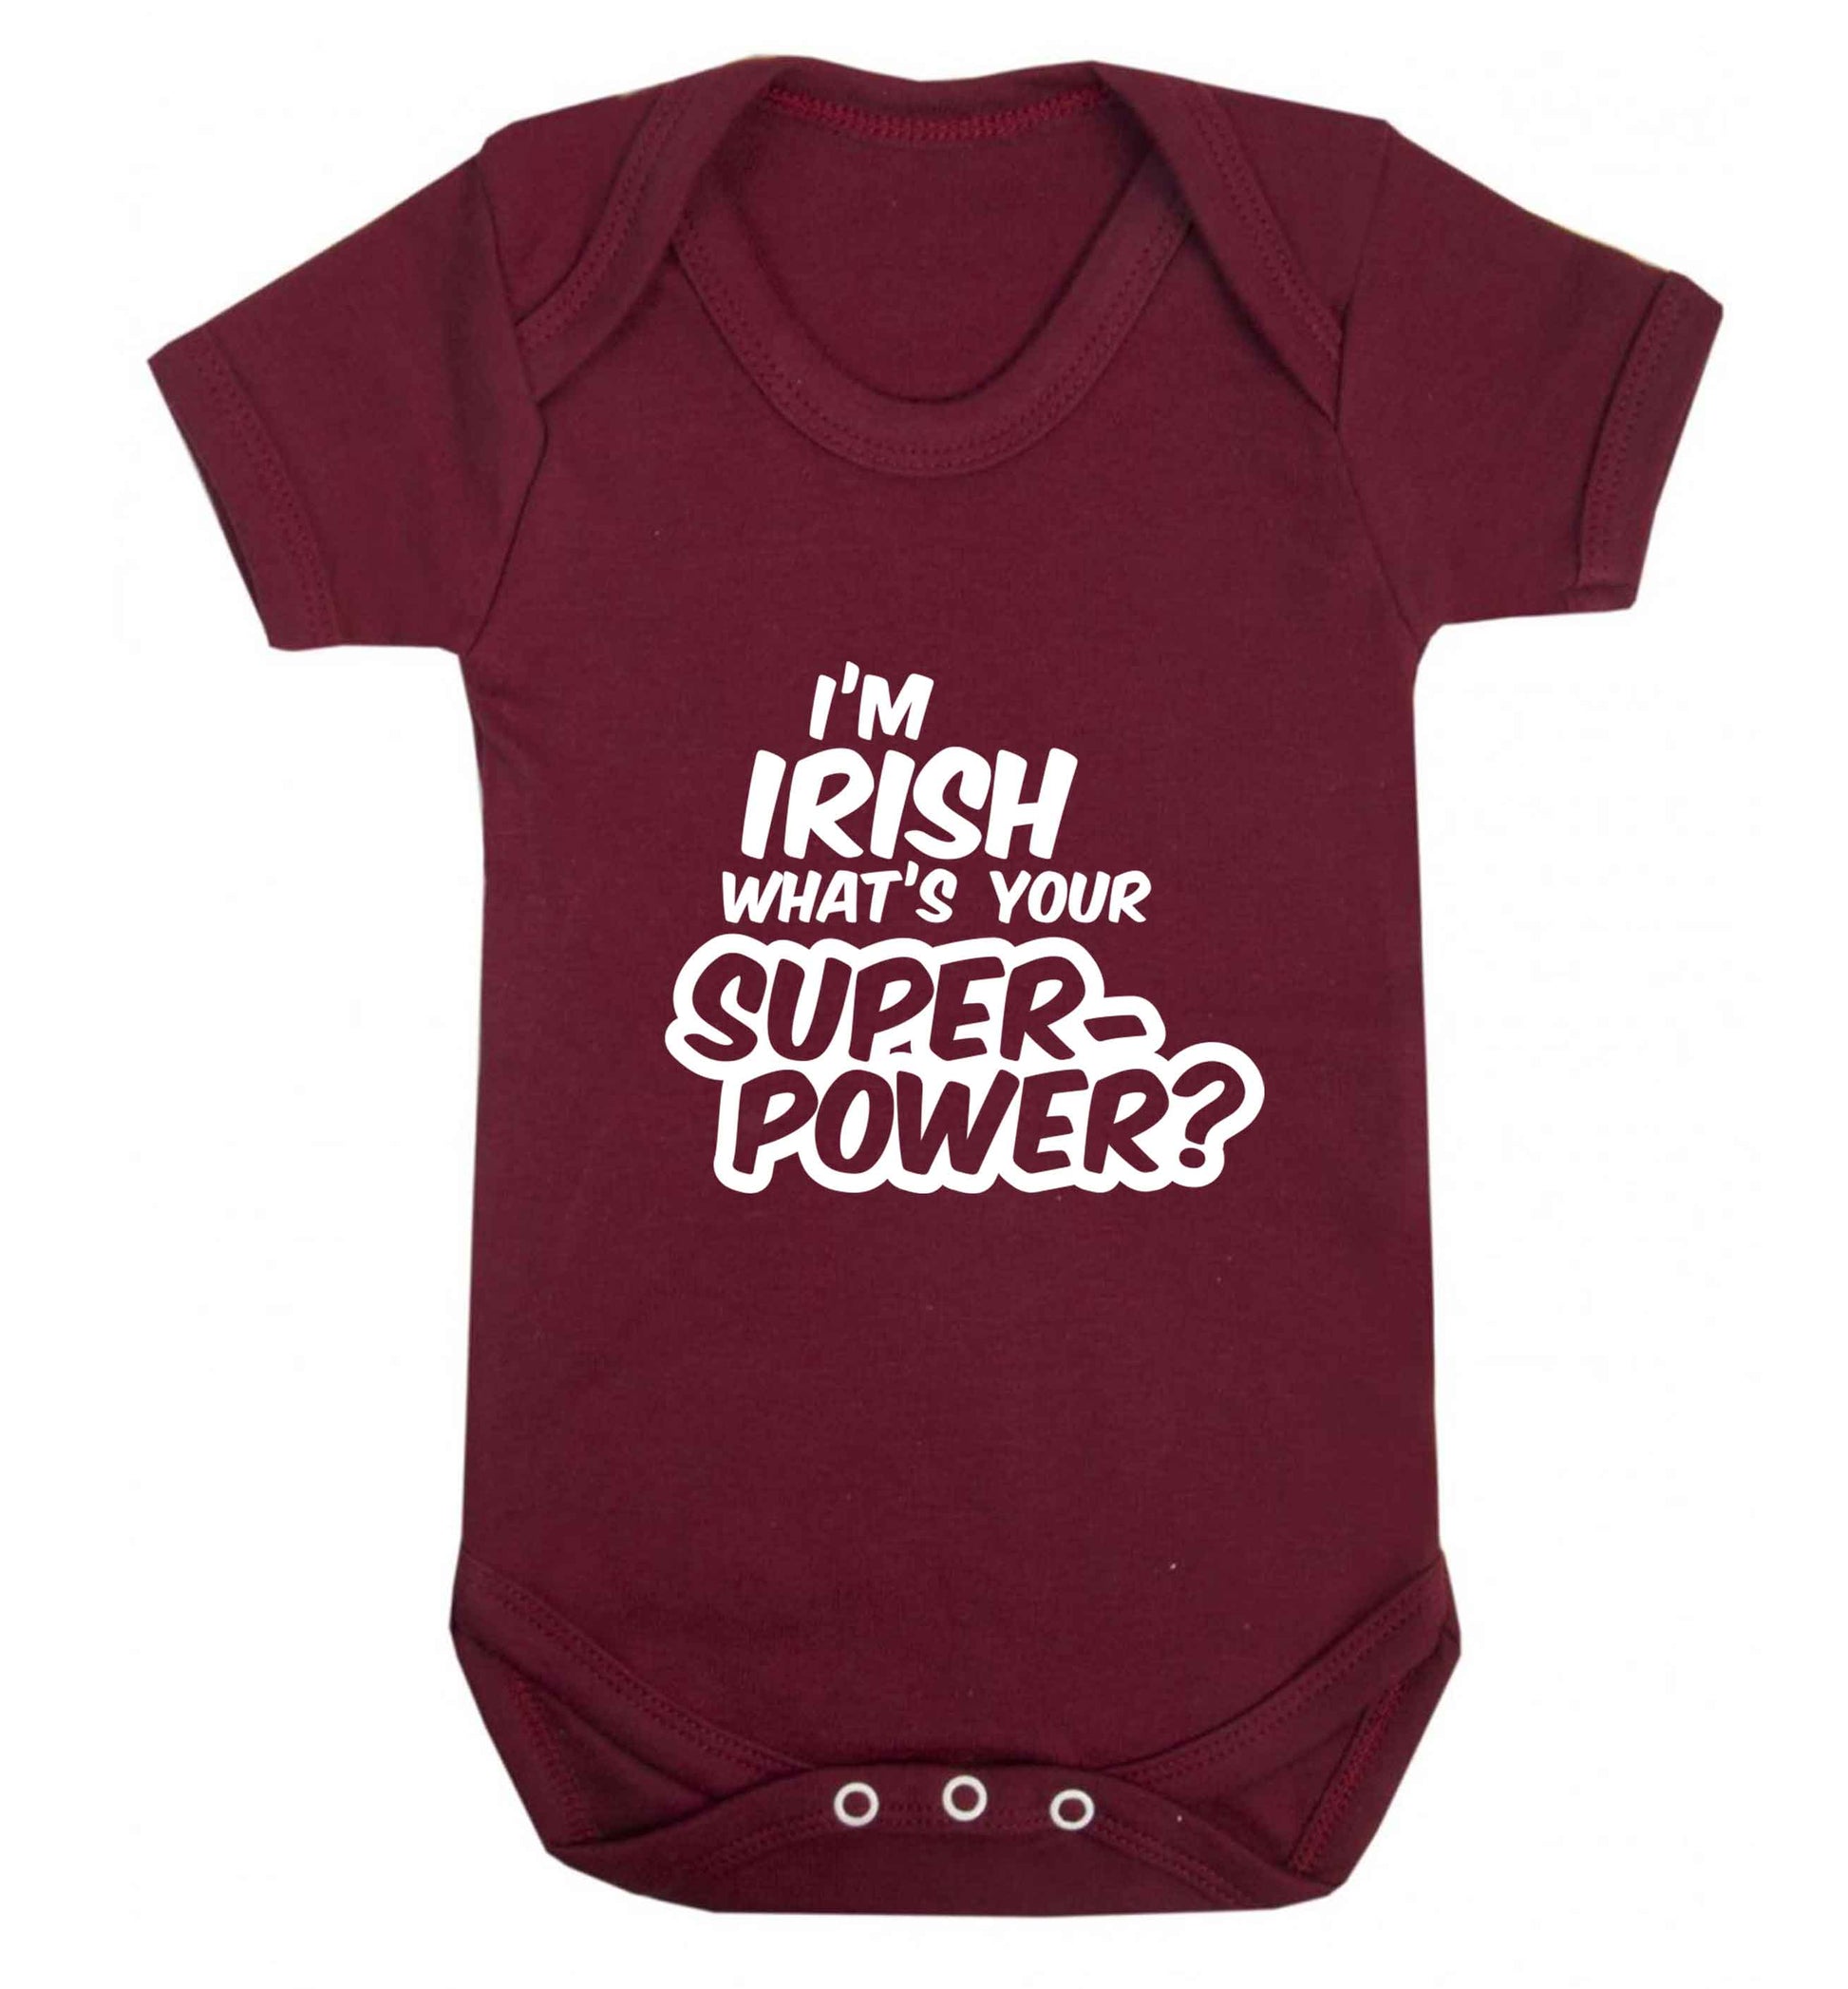 I'm Irish what's your superpower? baby vest maroon 18-24 months